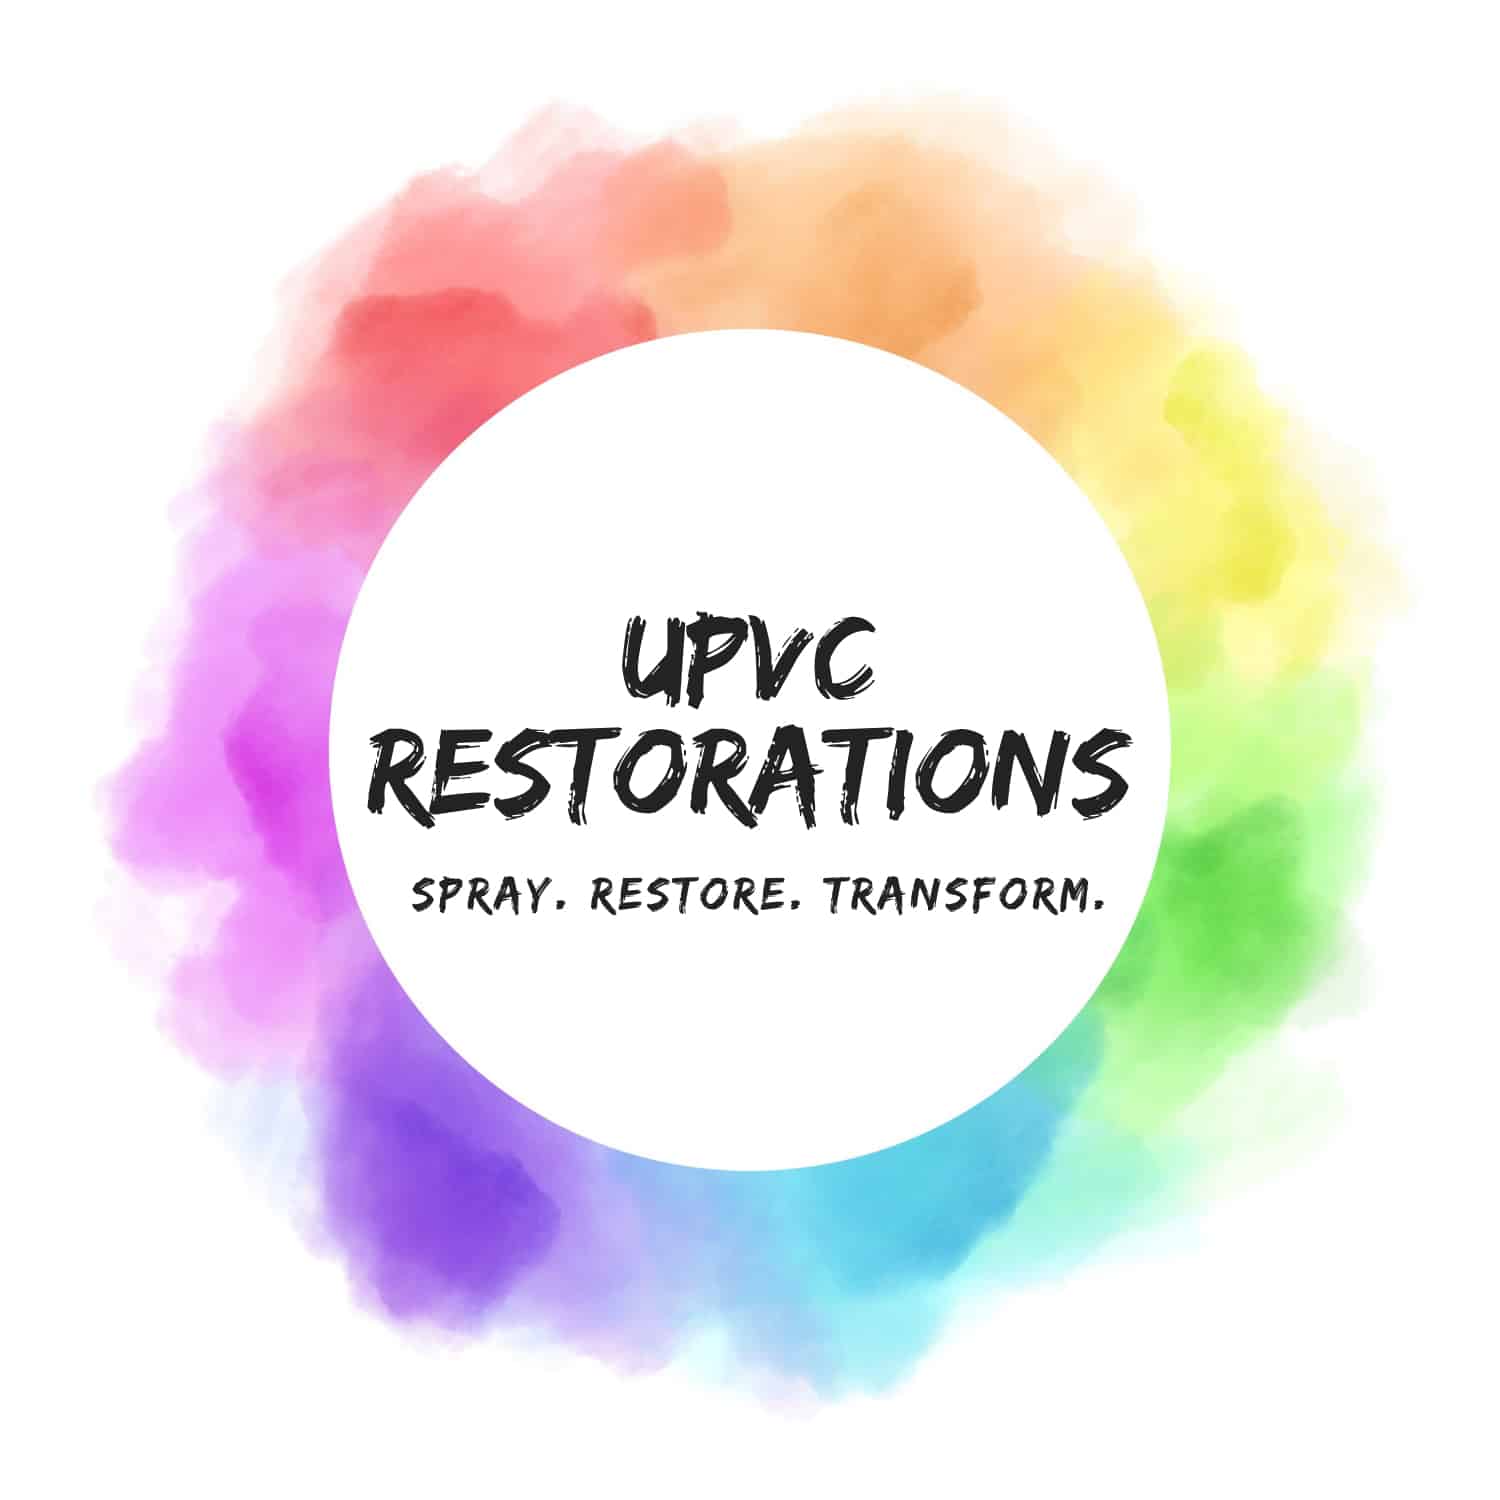 UPVC Restorations